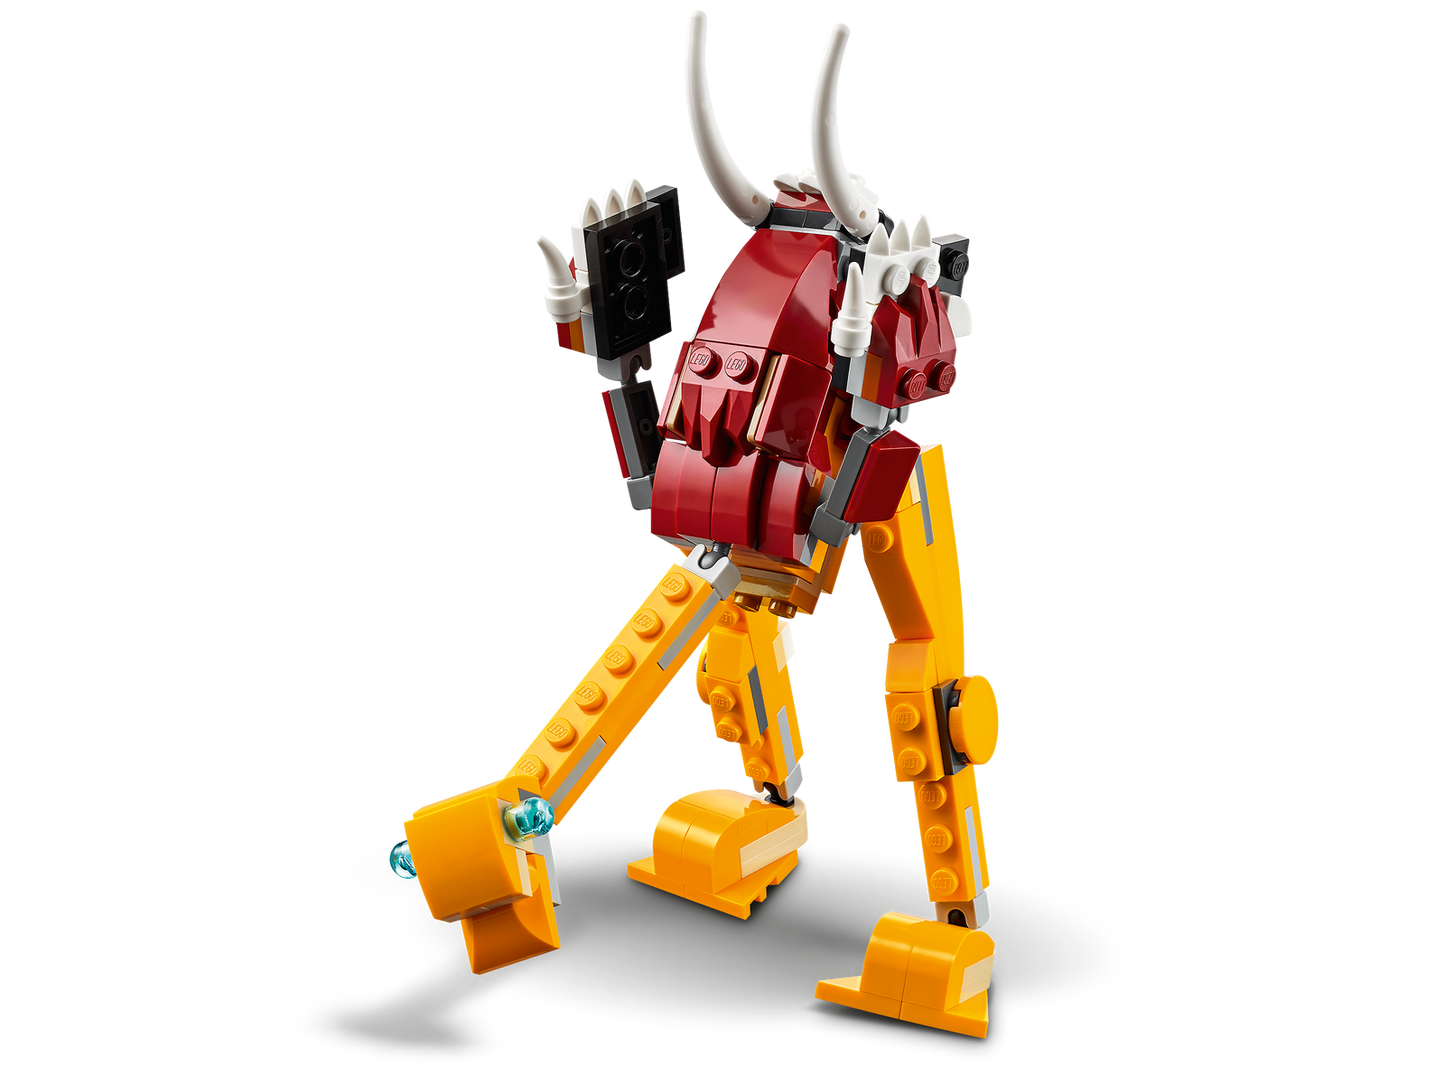 LEGO Creator Wild Lion 31112